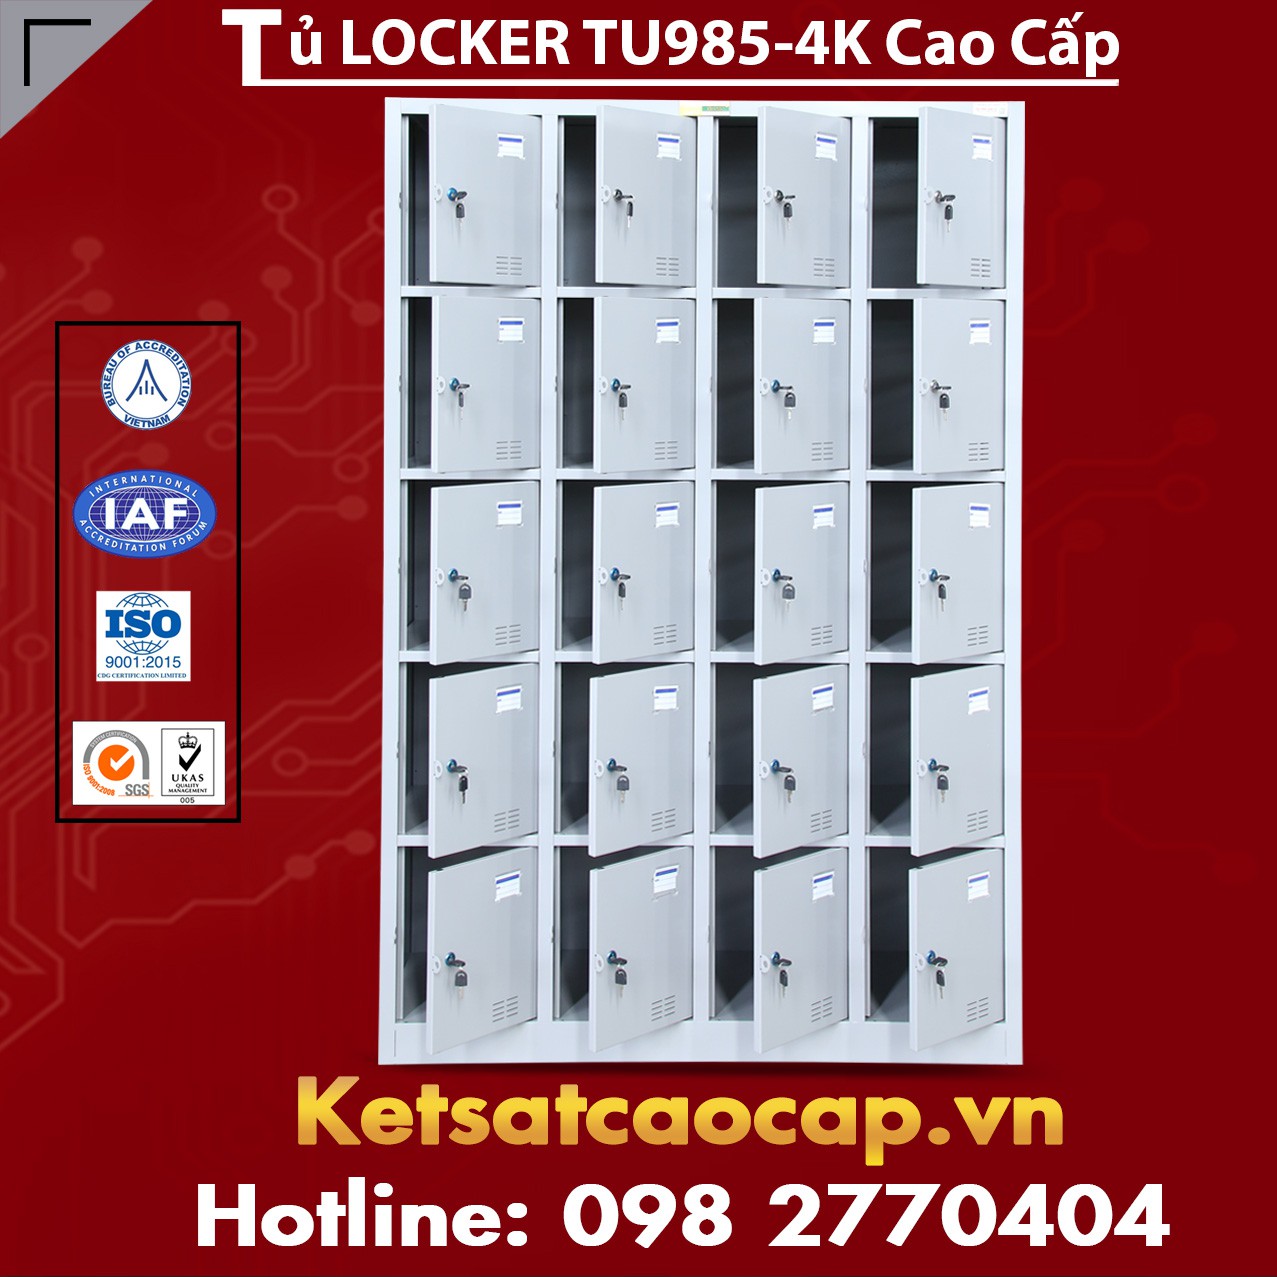 Tủ Locker TU985-4K Cao Cấp